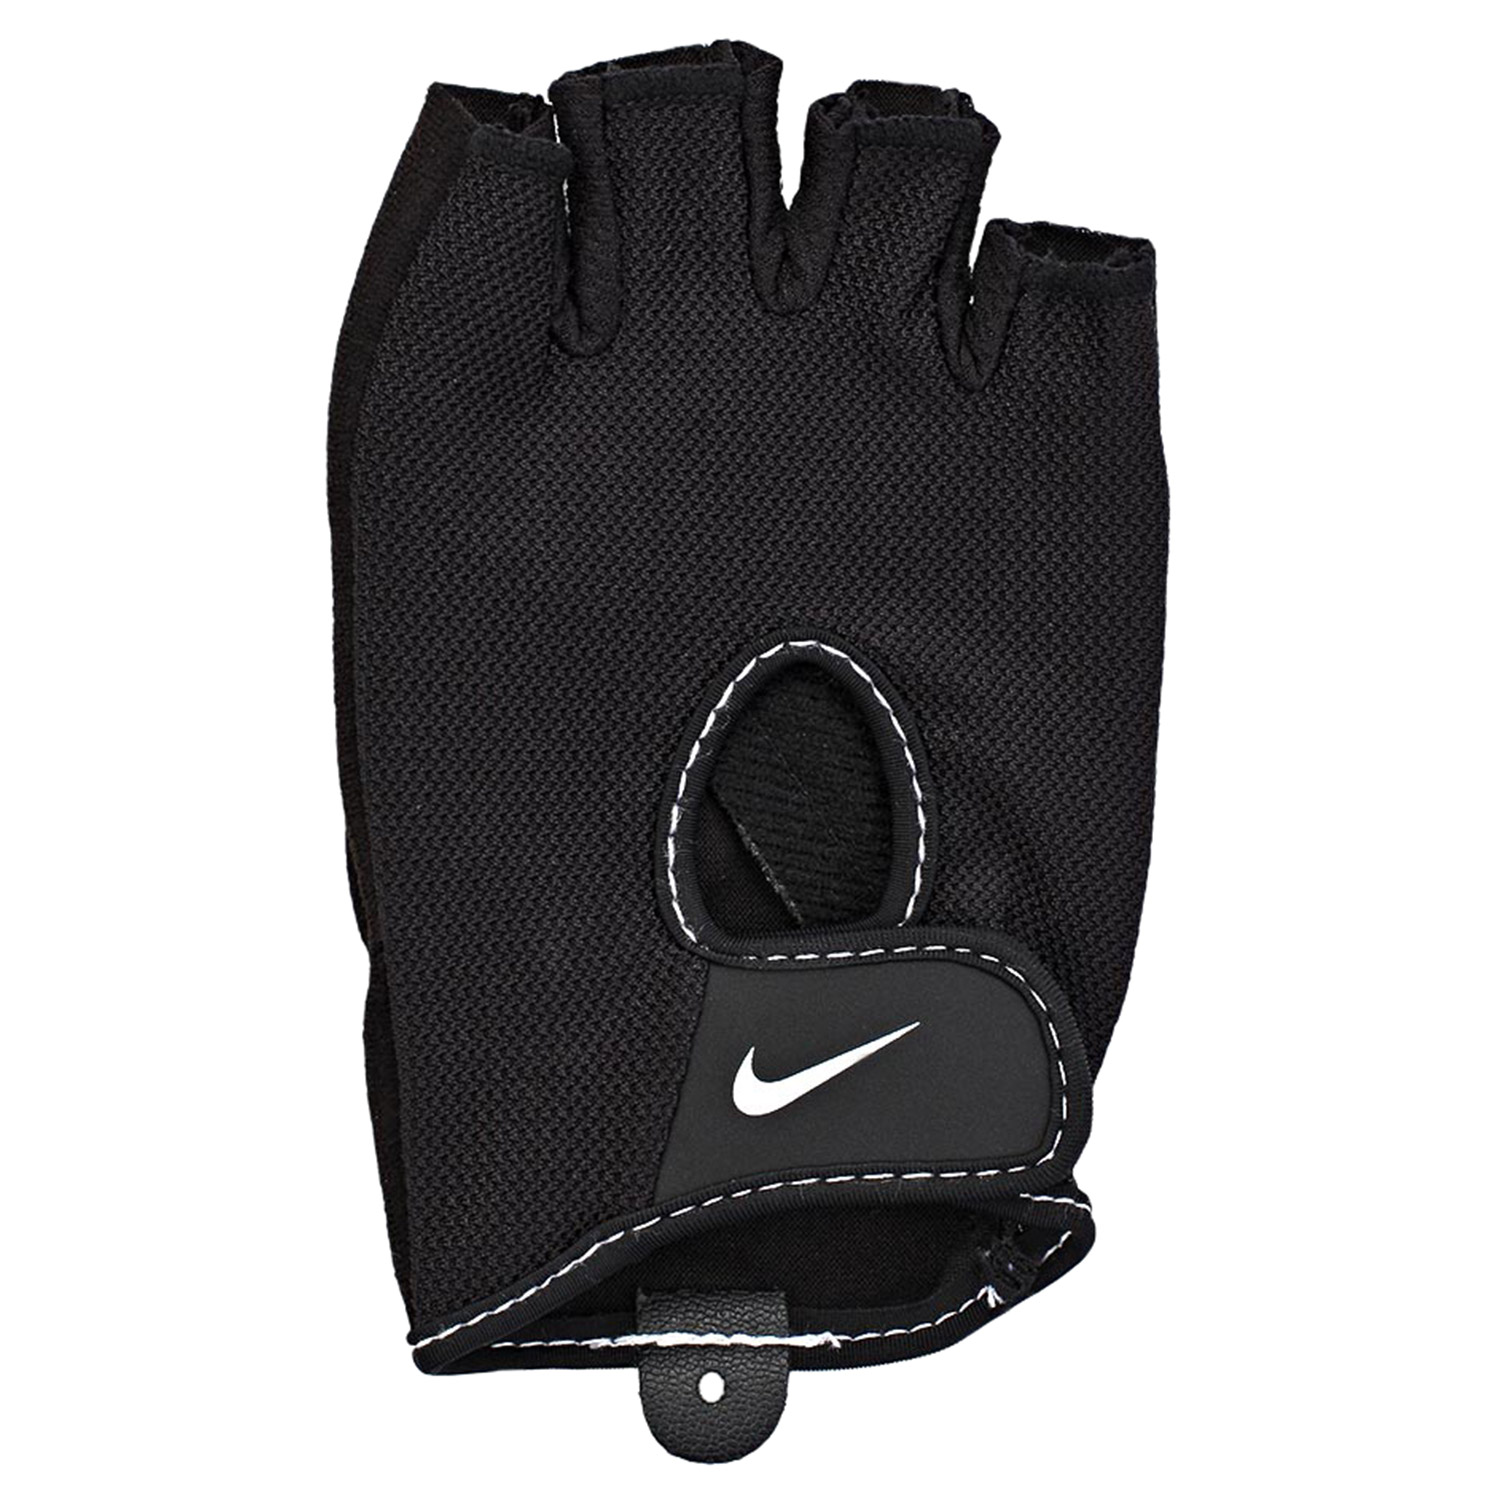 Перчатки для тренинга Nike Wmn's Fundamental Training Gloves II